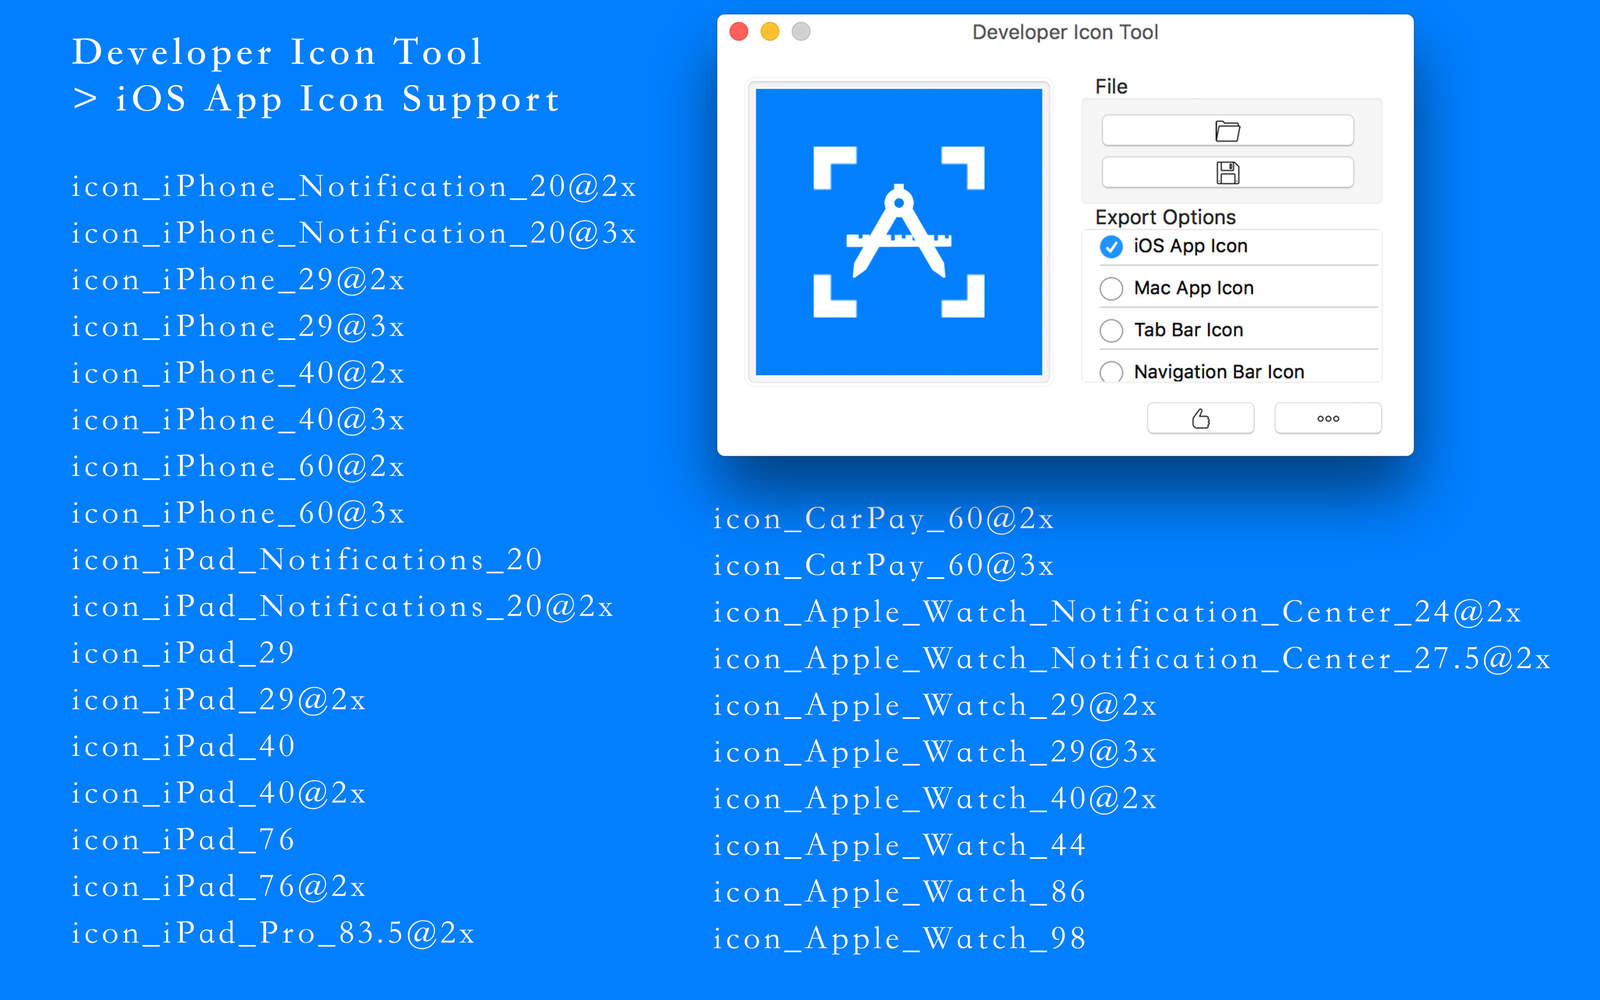 Developer Icon Tool 17.0 : Main Window